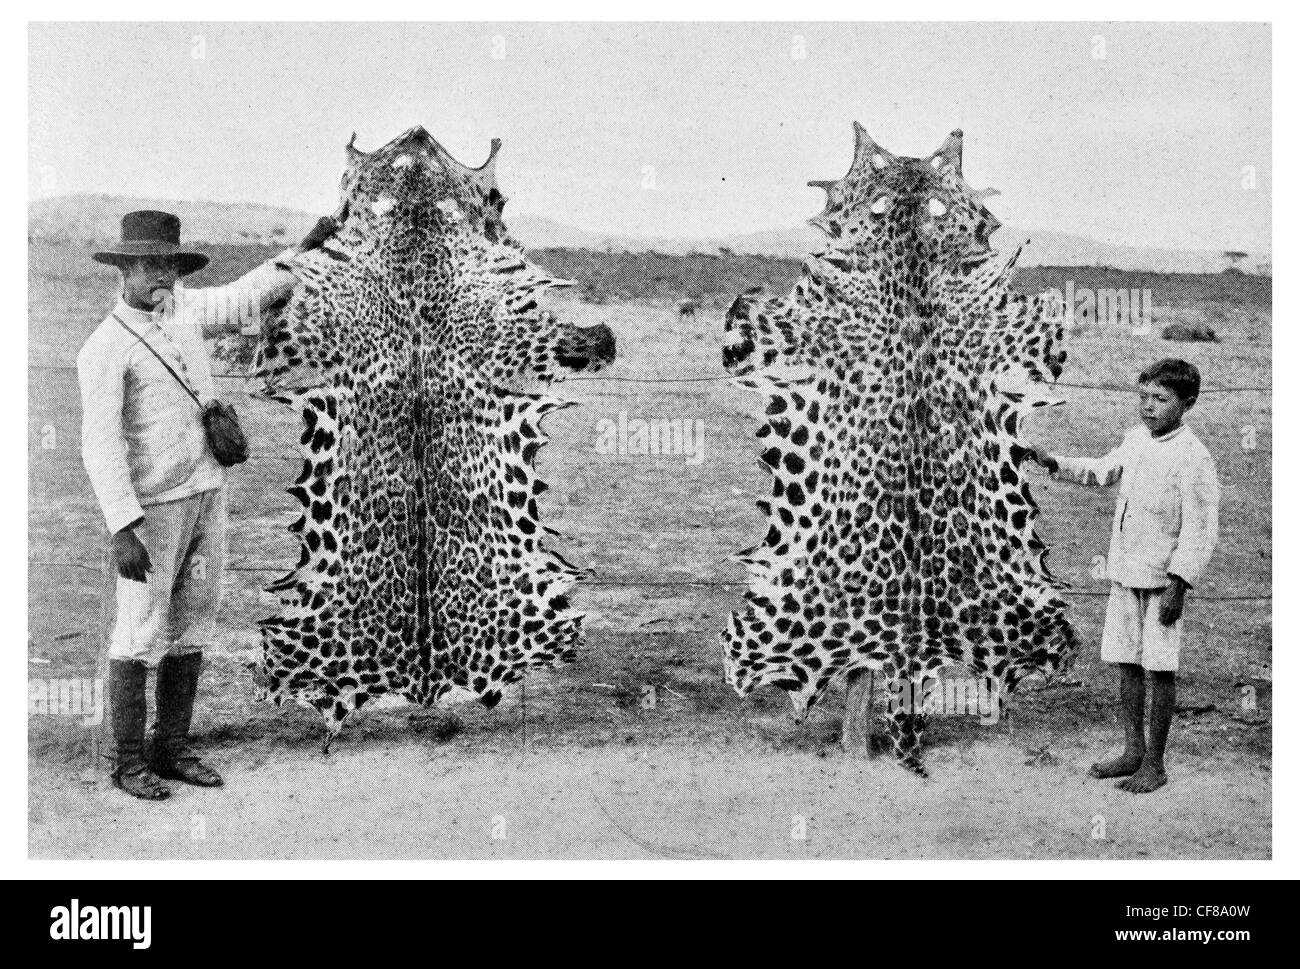 1926 Jaguar Ocultar Panthera onca América del Sur Foto de stock